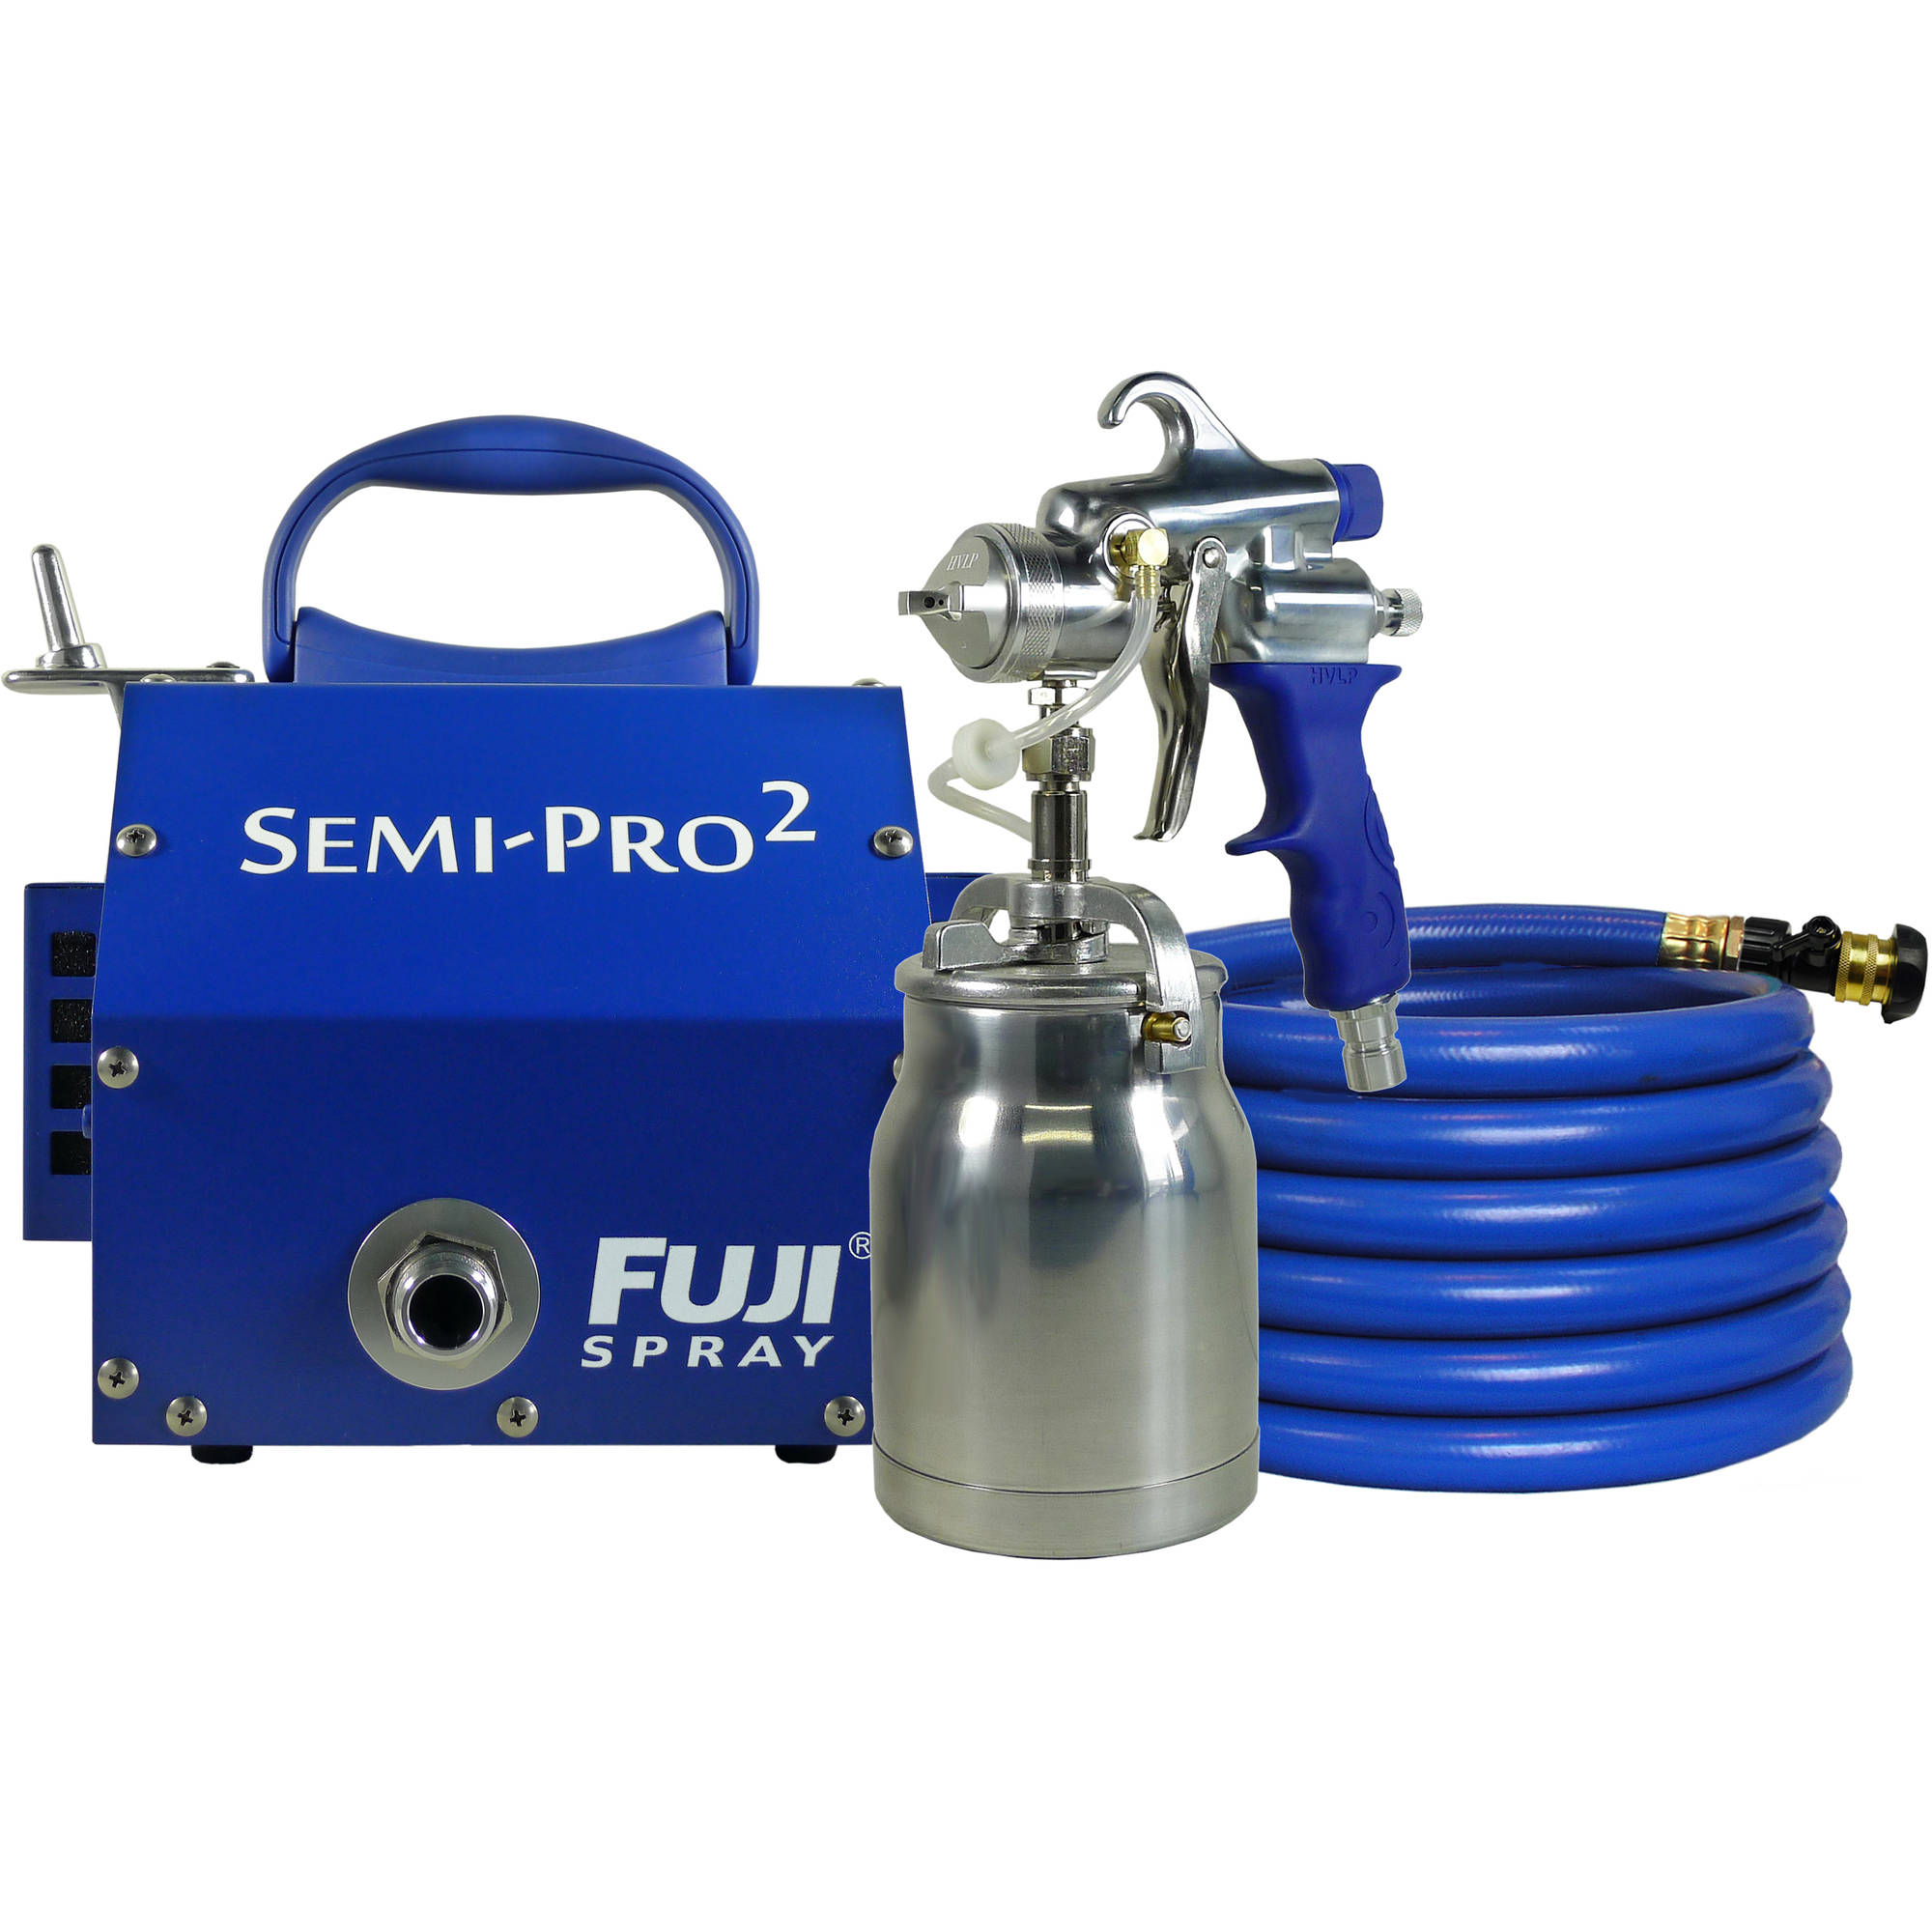 Fuji Spray Semi-PRO 2 HVLP Spray System, 2202 - image 3 of 3